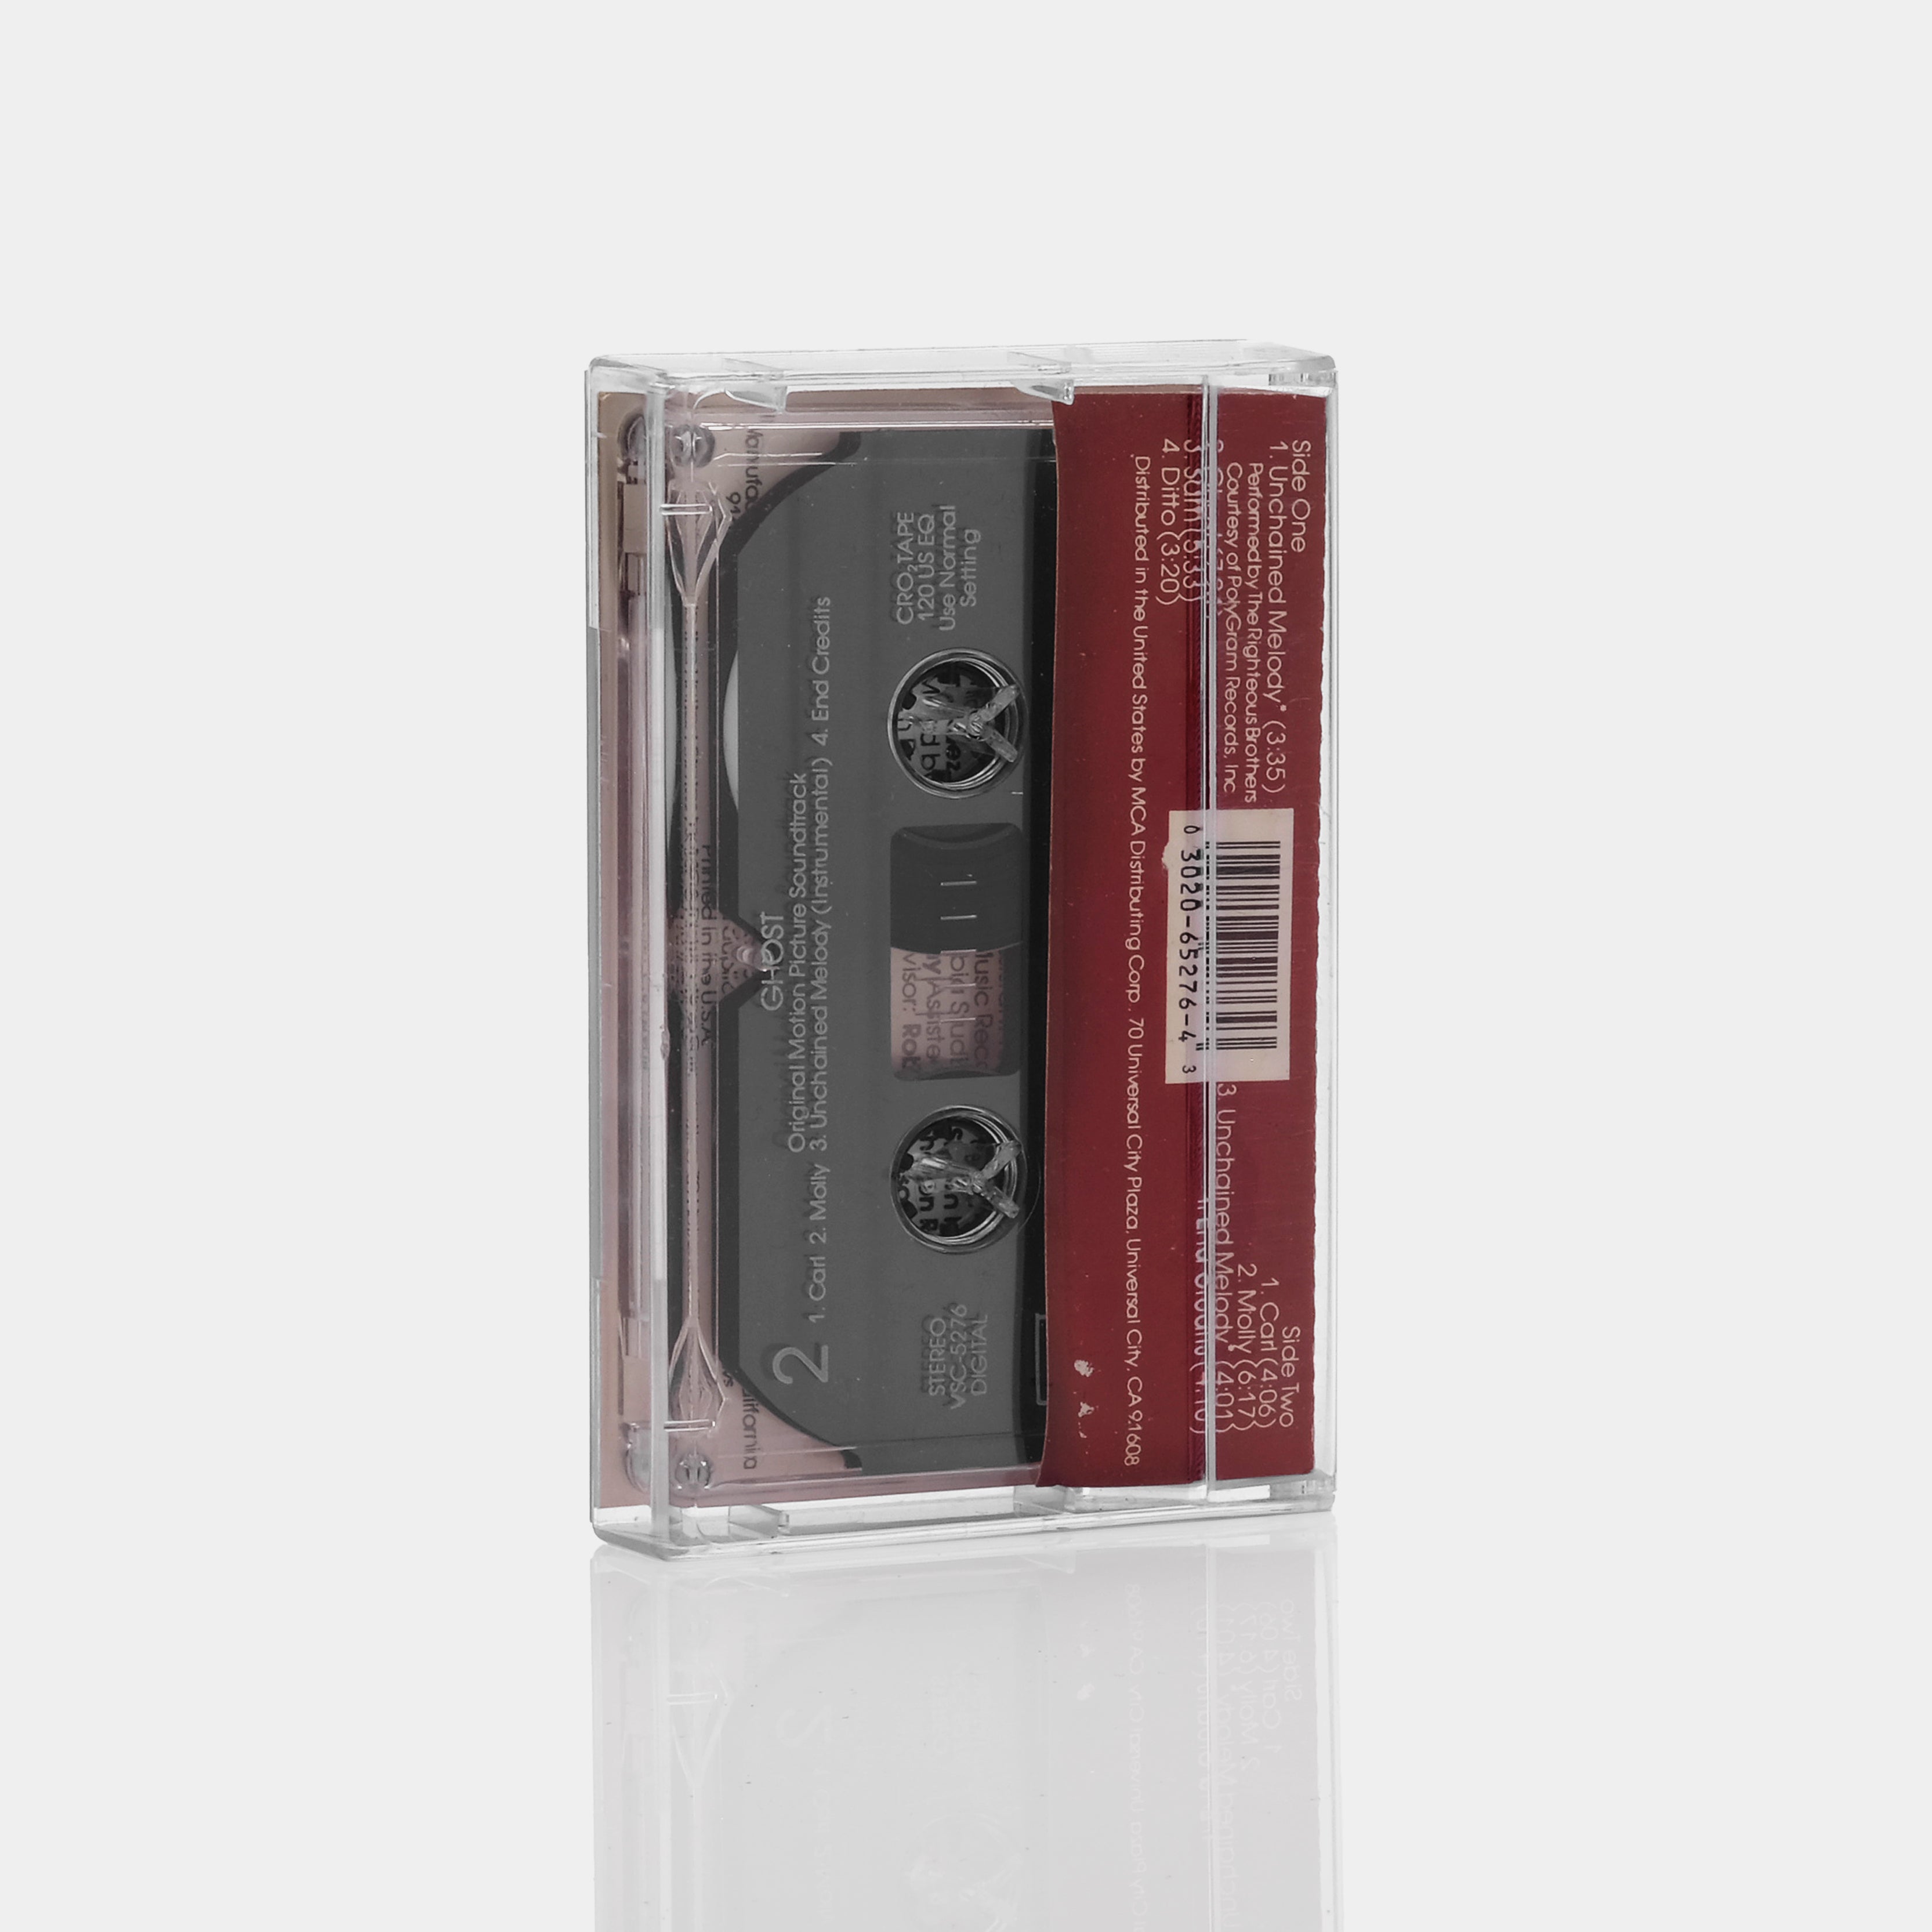 Maurice Jarre - Ghost (Original Motion Picture Soundtrack) Cassette Tape